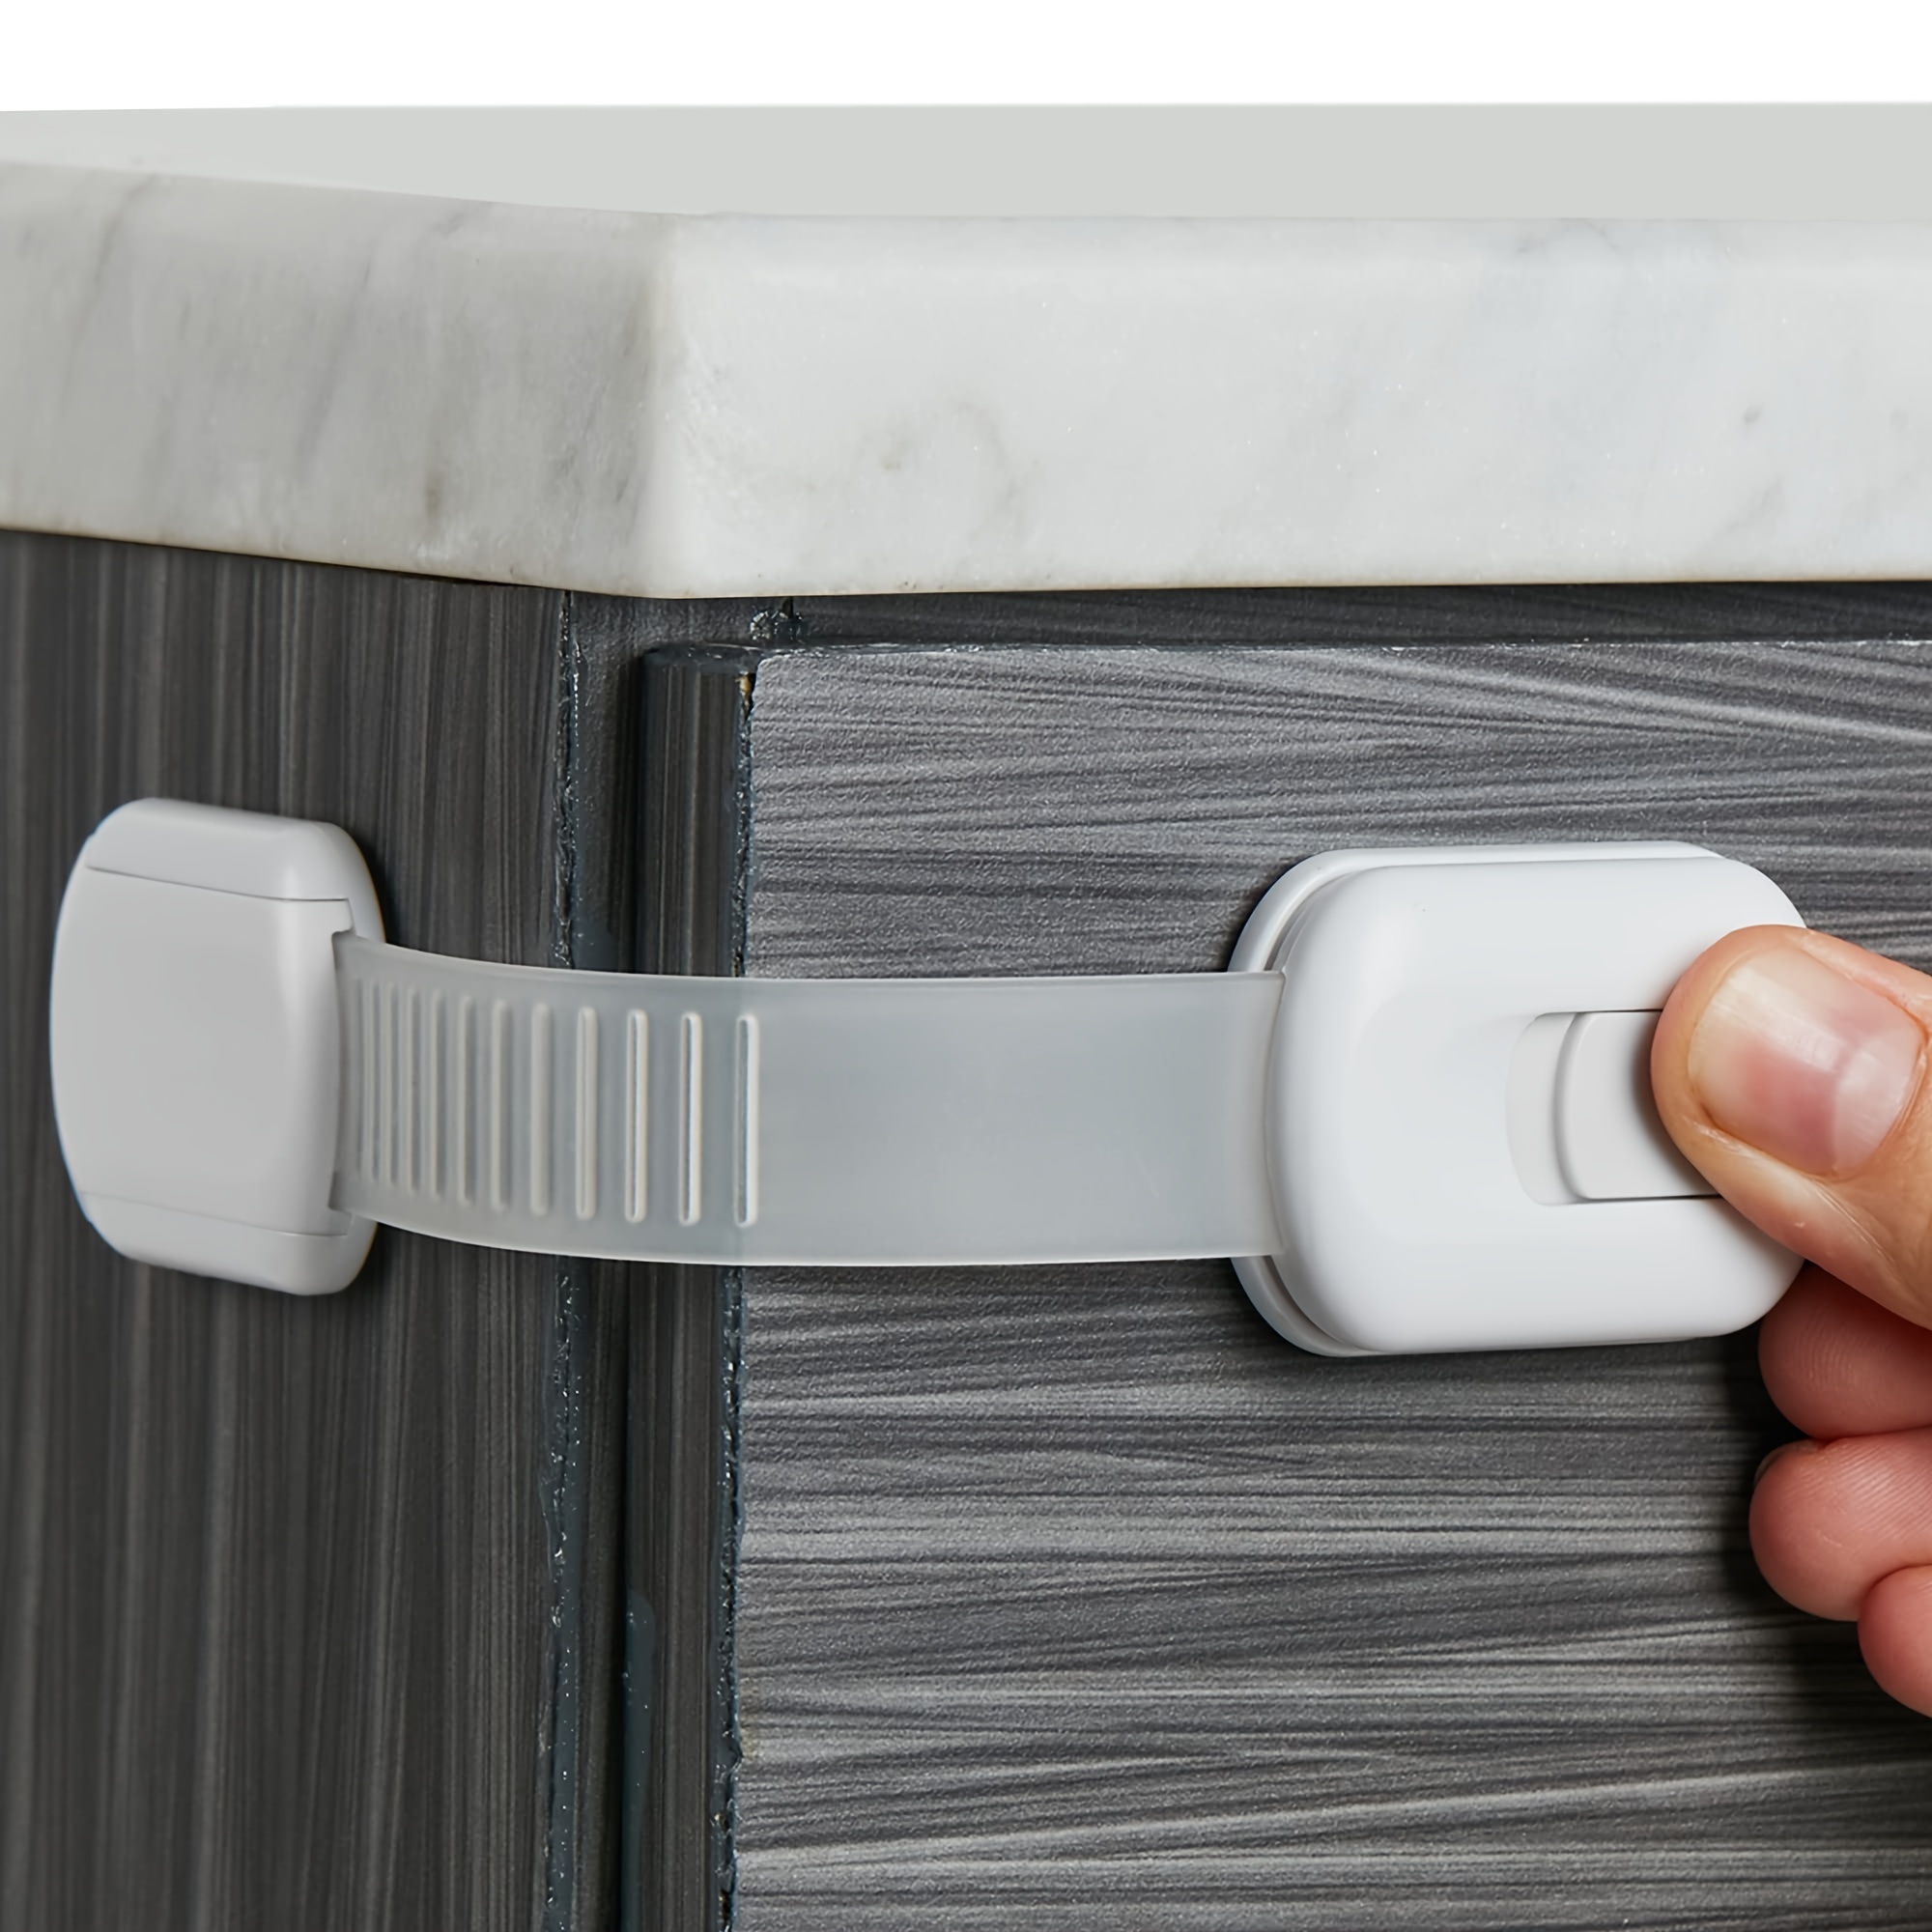 Dropship Home Baby Safety Protection Lock Anti-Clip Hand Door Closet  Cabinet Locks Fo Fridge Cabinet